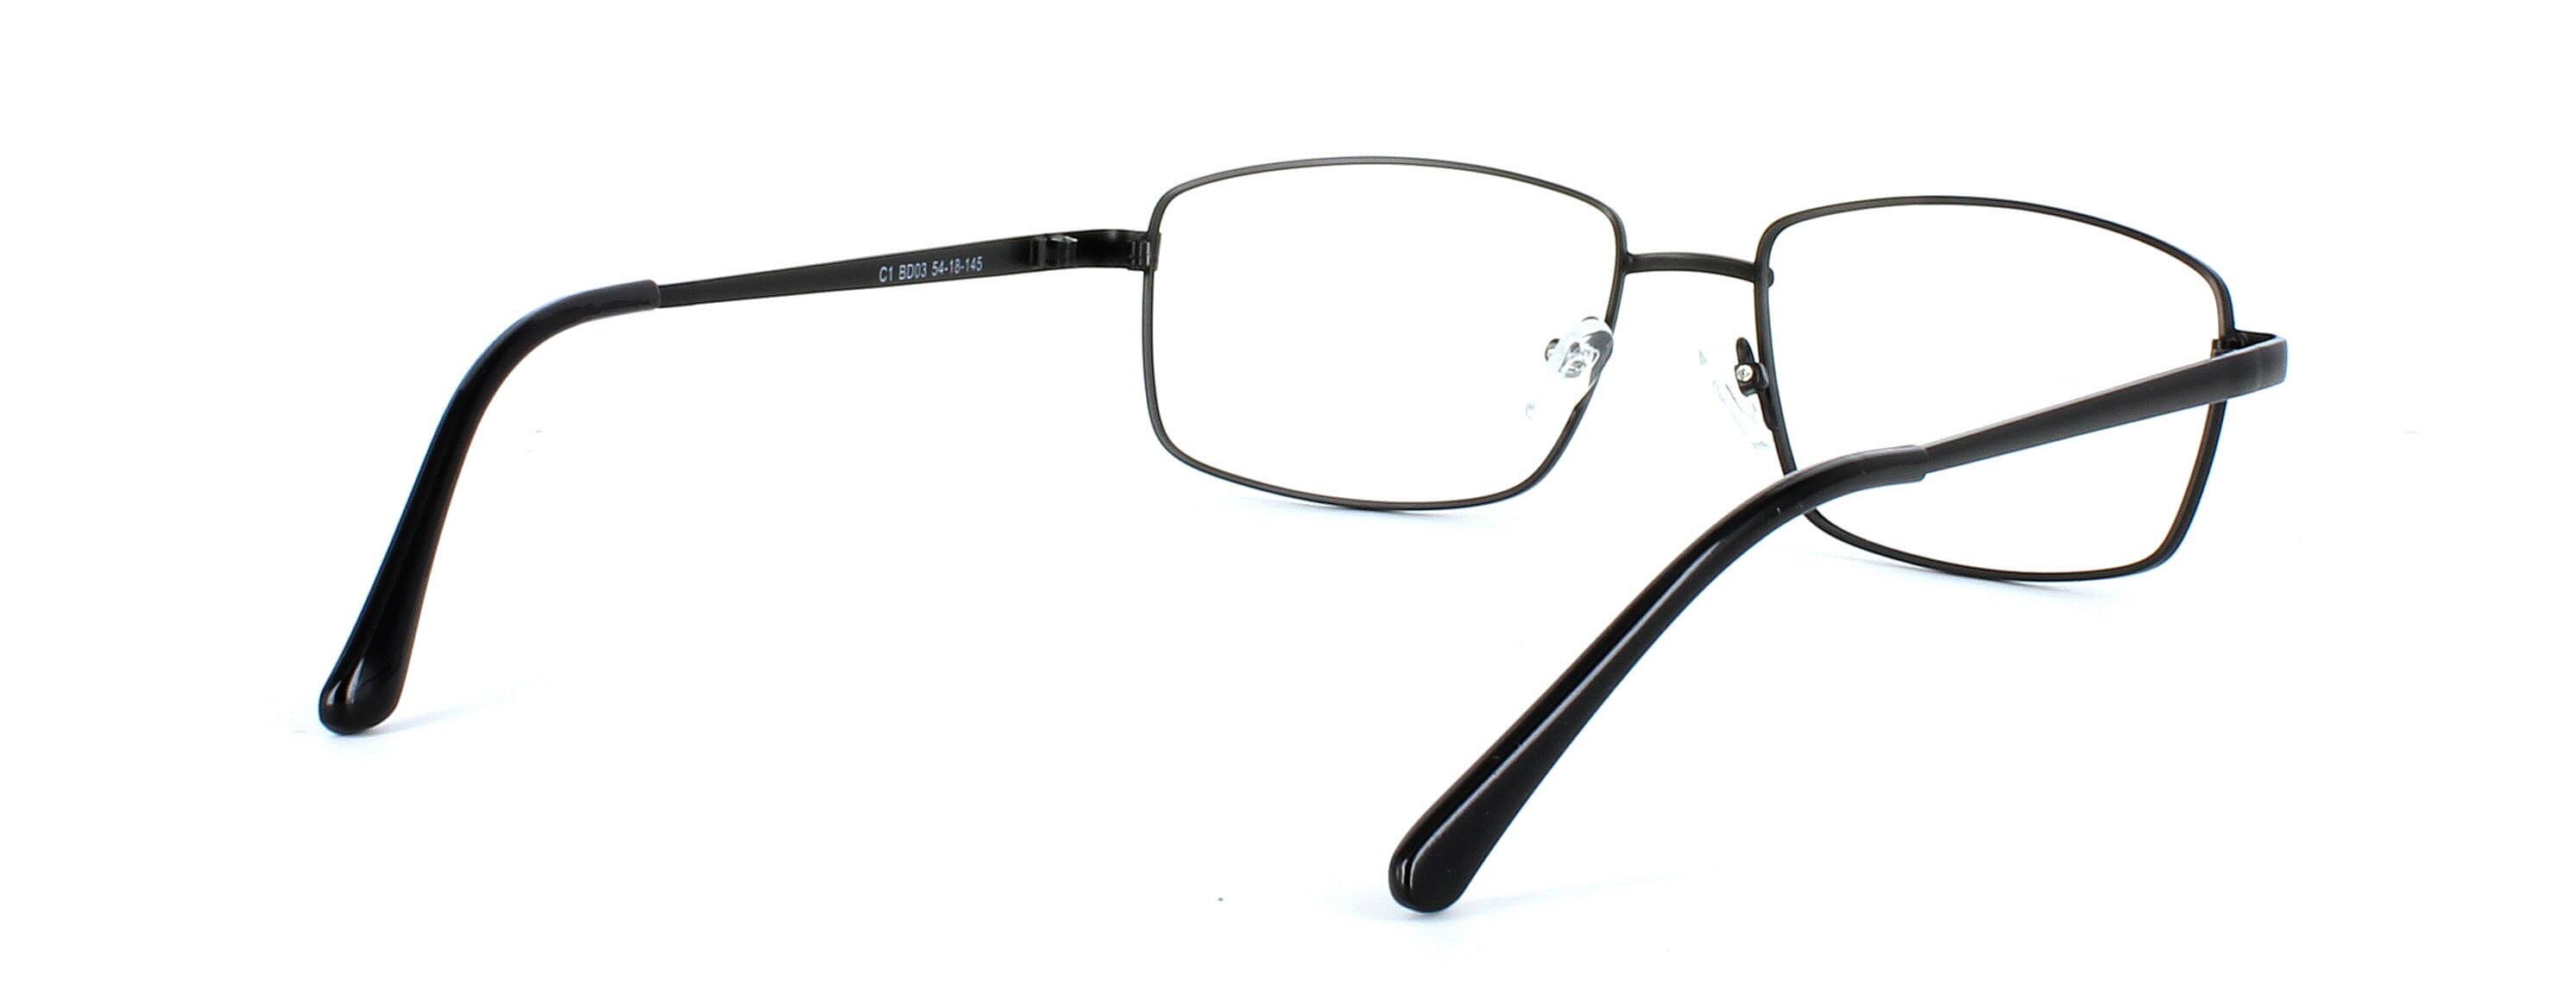 Ventry - Gents rectangular shaped full rim metal glasses - image view 5